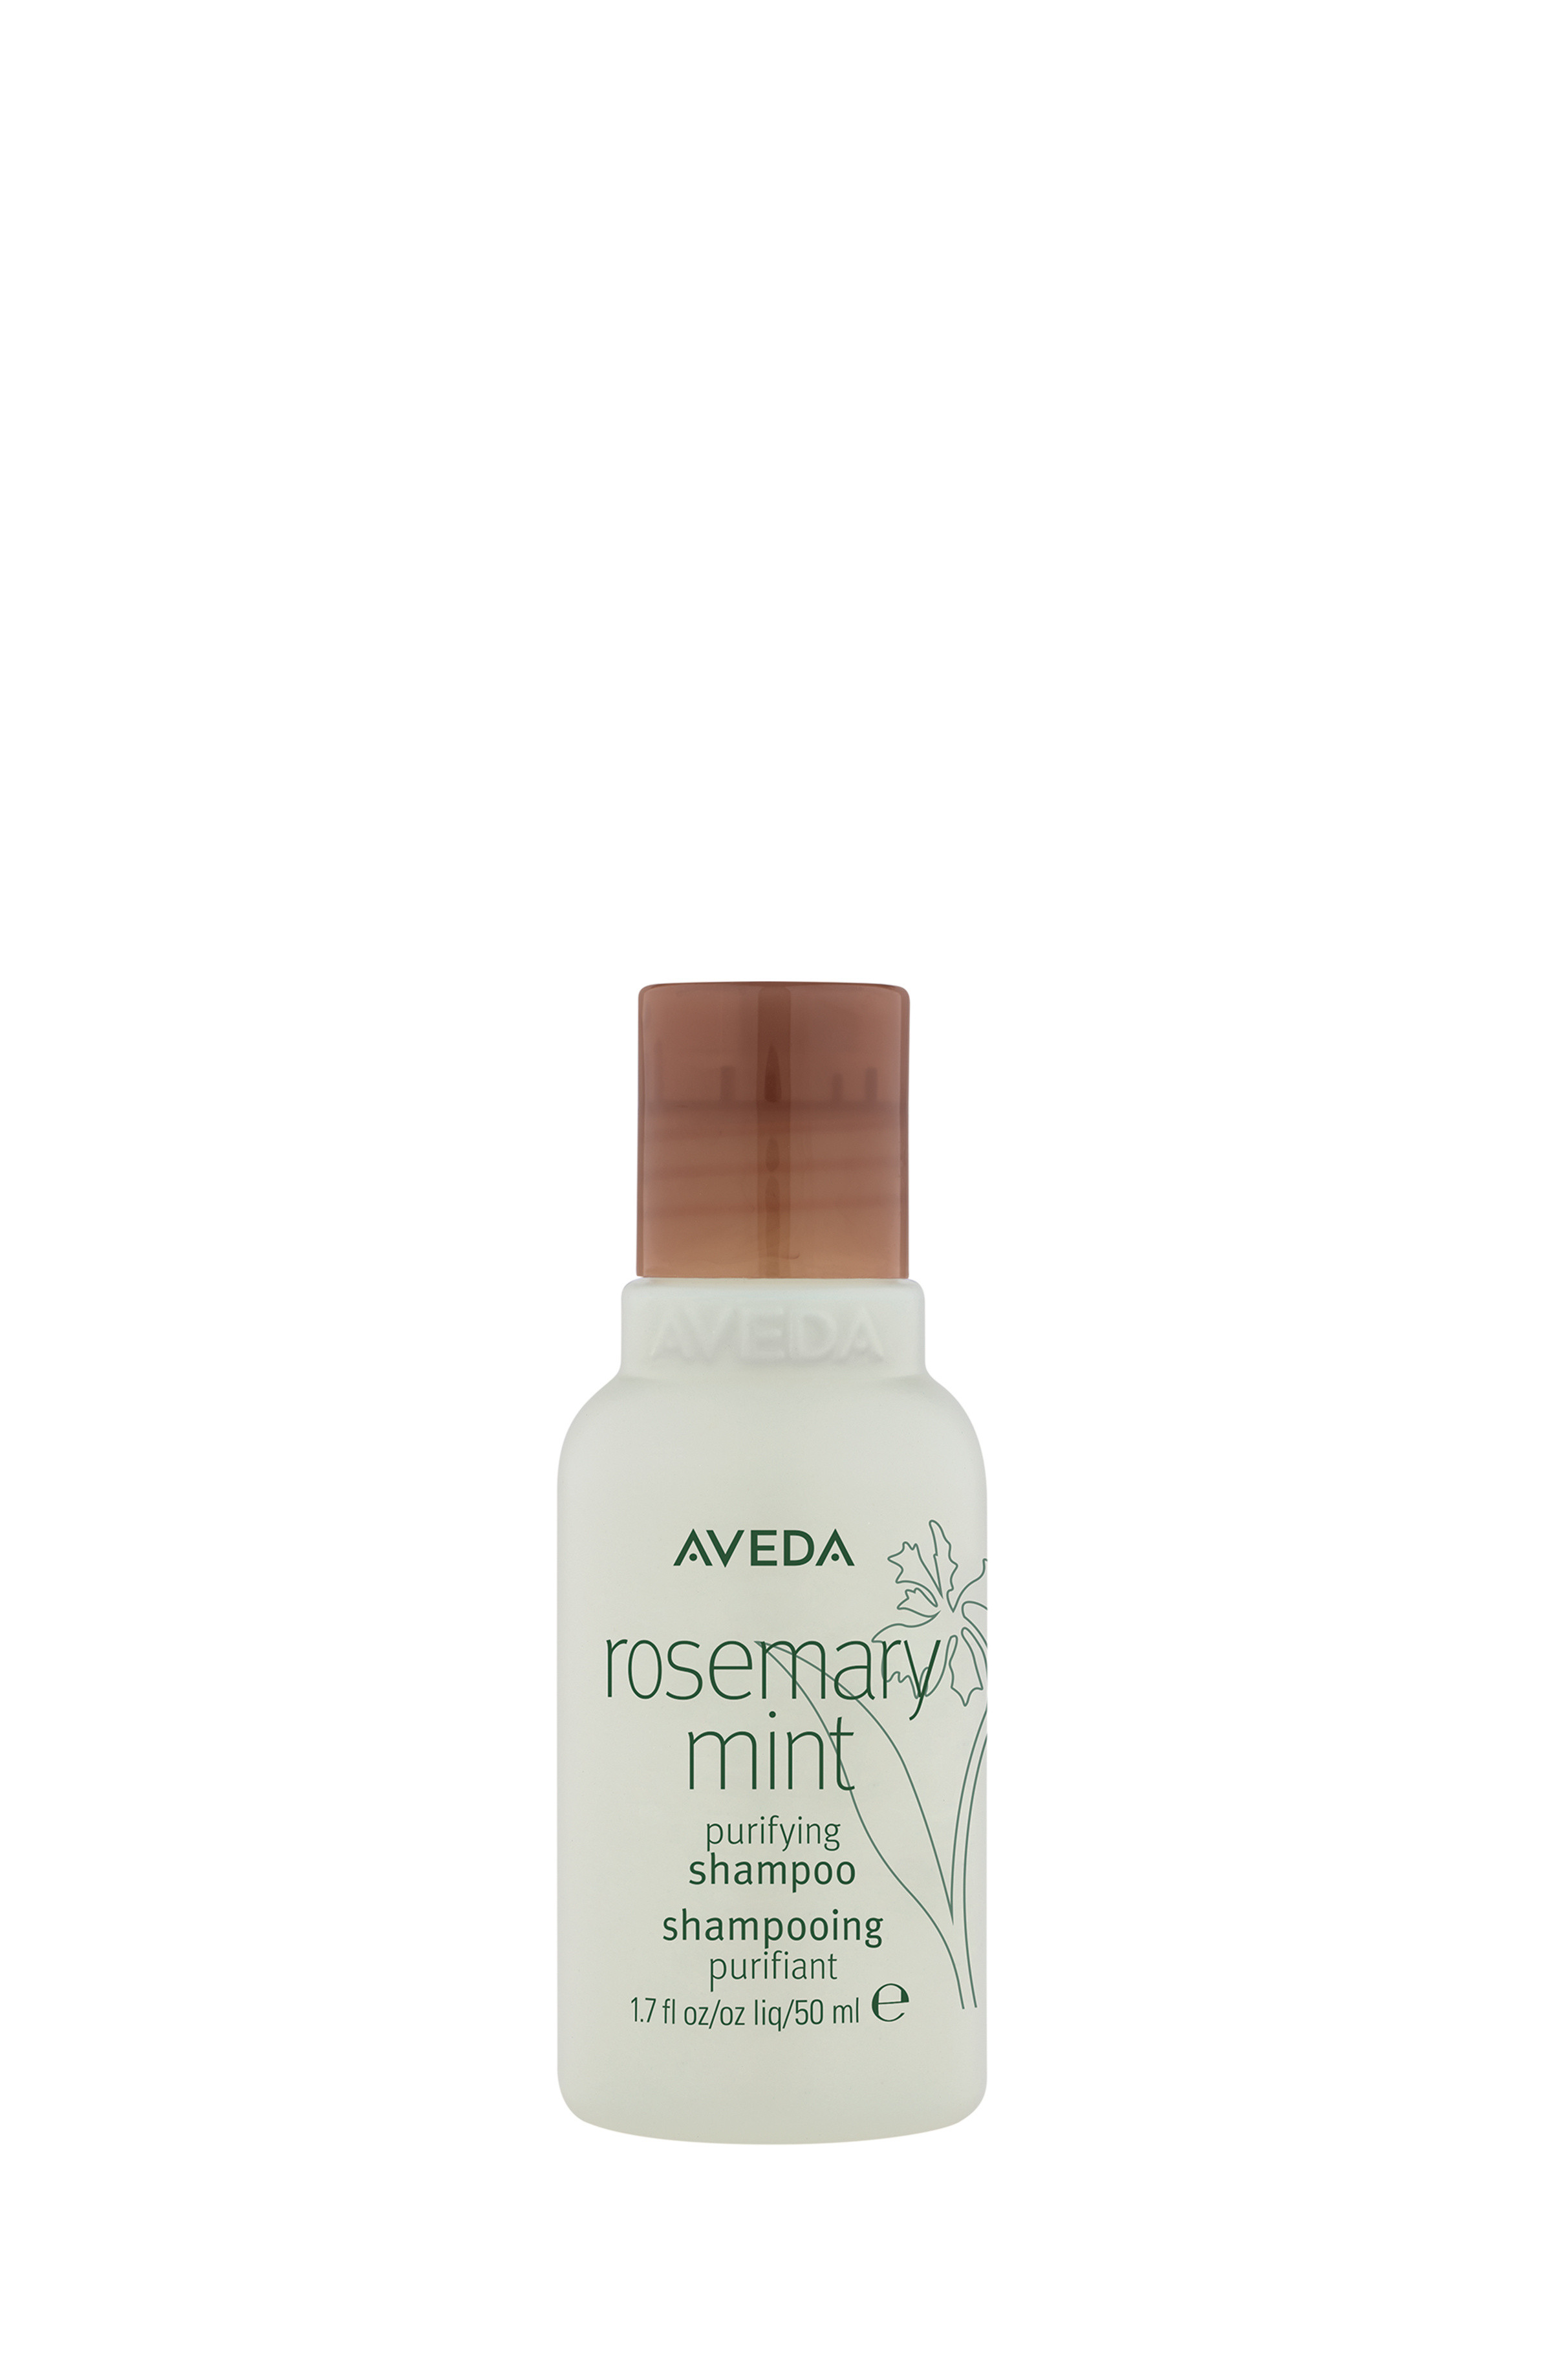 Aveda rosemary mint purifying shampoo 50 ml, Green, large image number 0